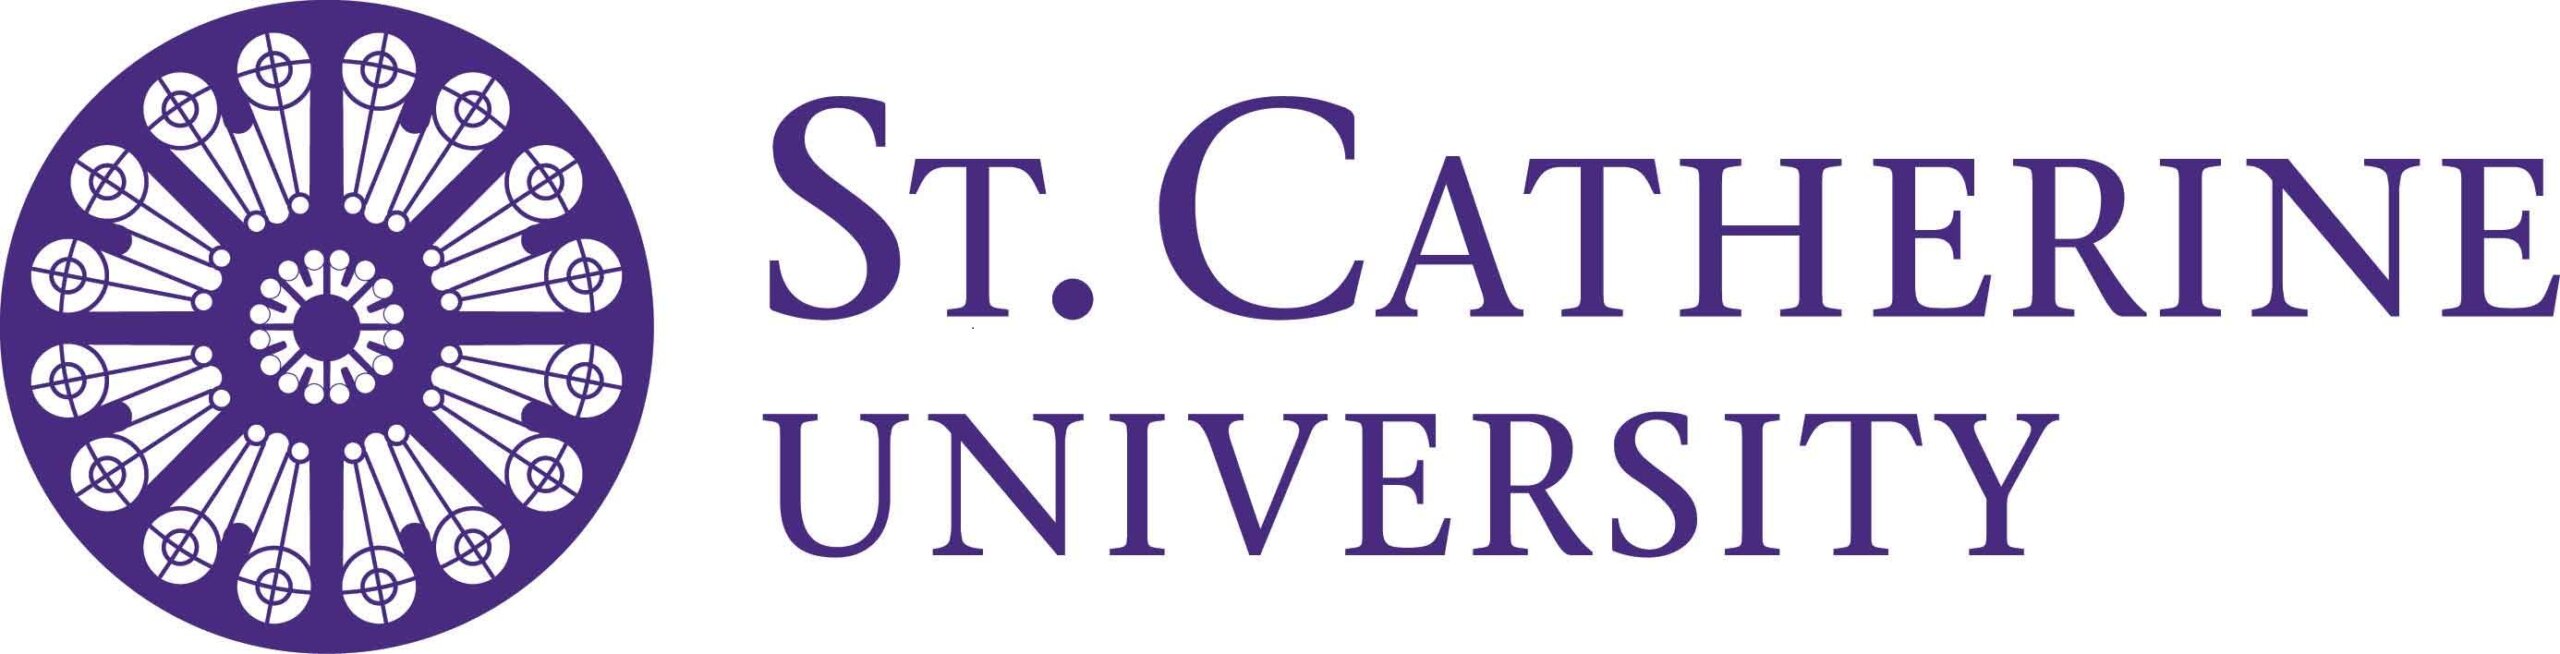 St Catherine University logo